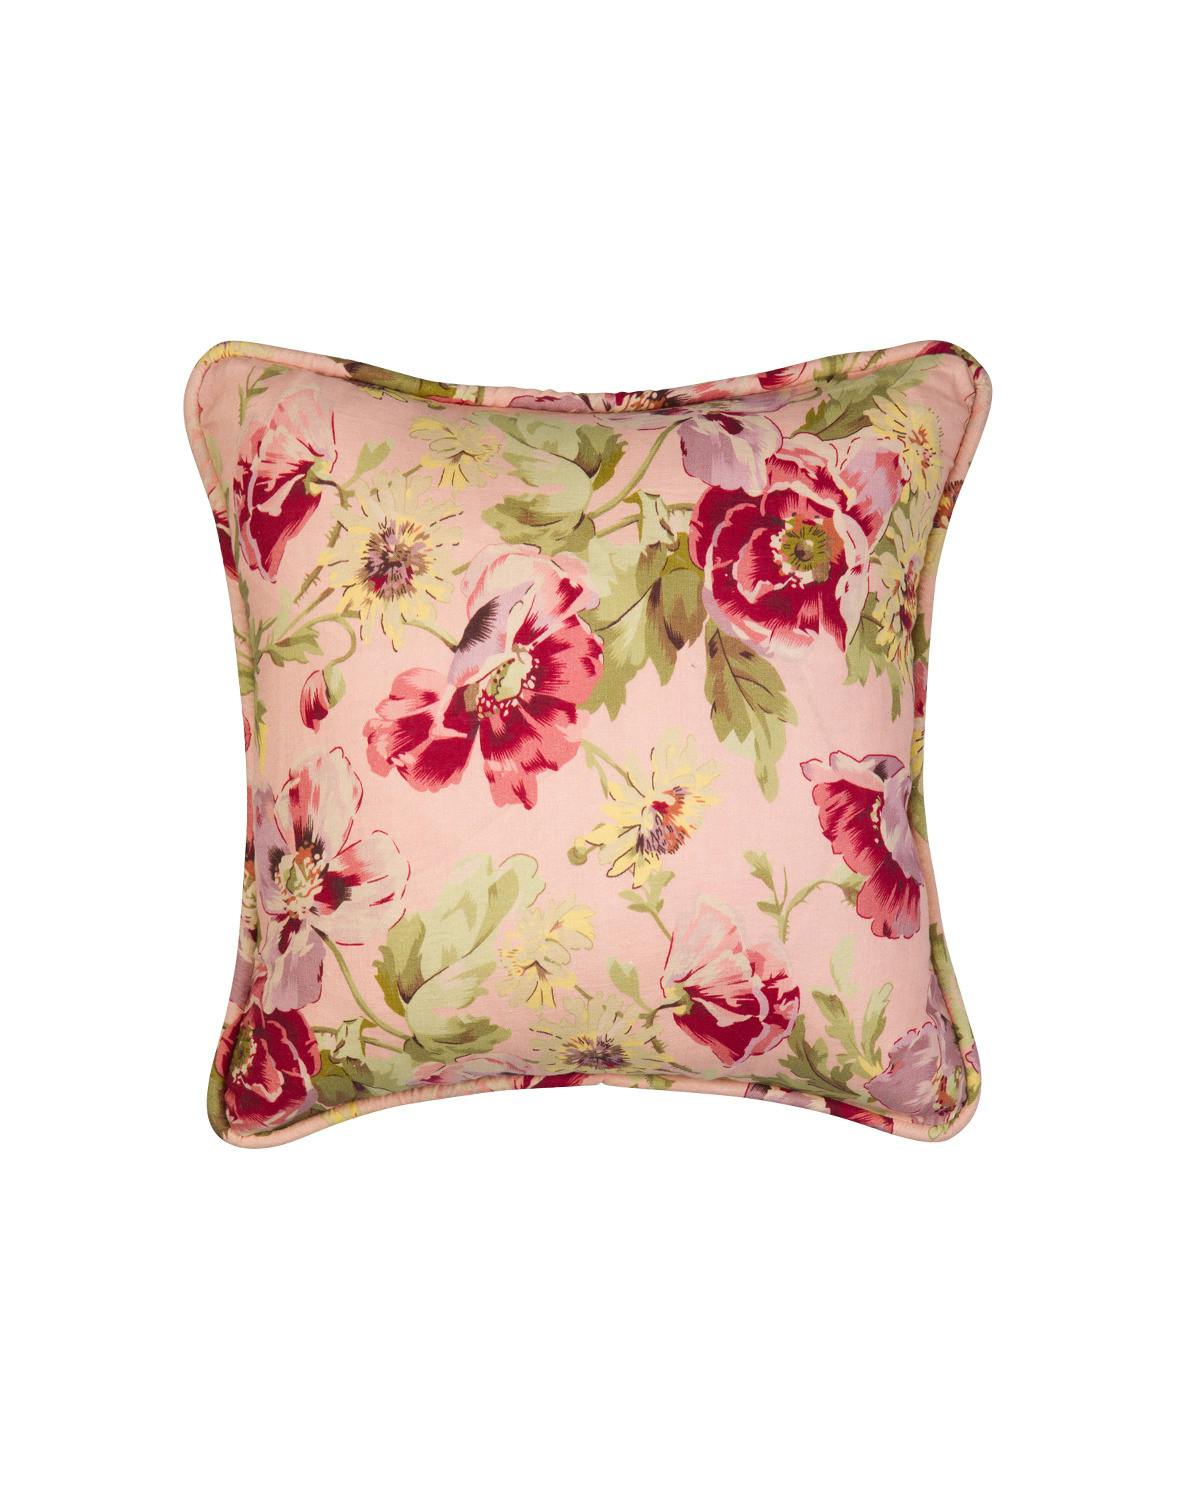 Cushion Cover Linen 60x60 cm, Poppy field. Image #1